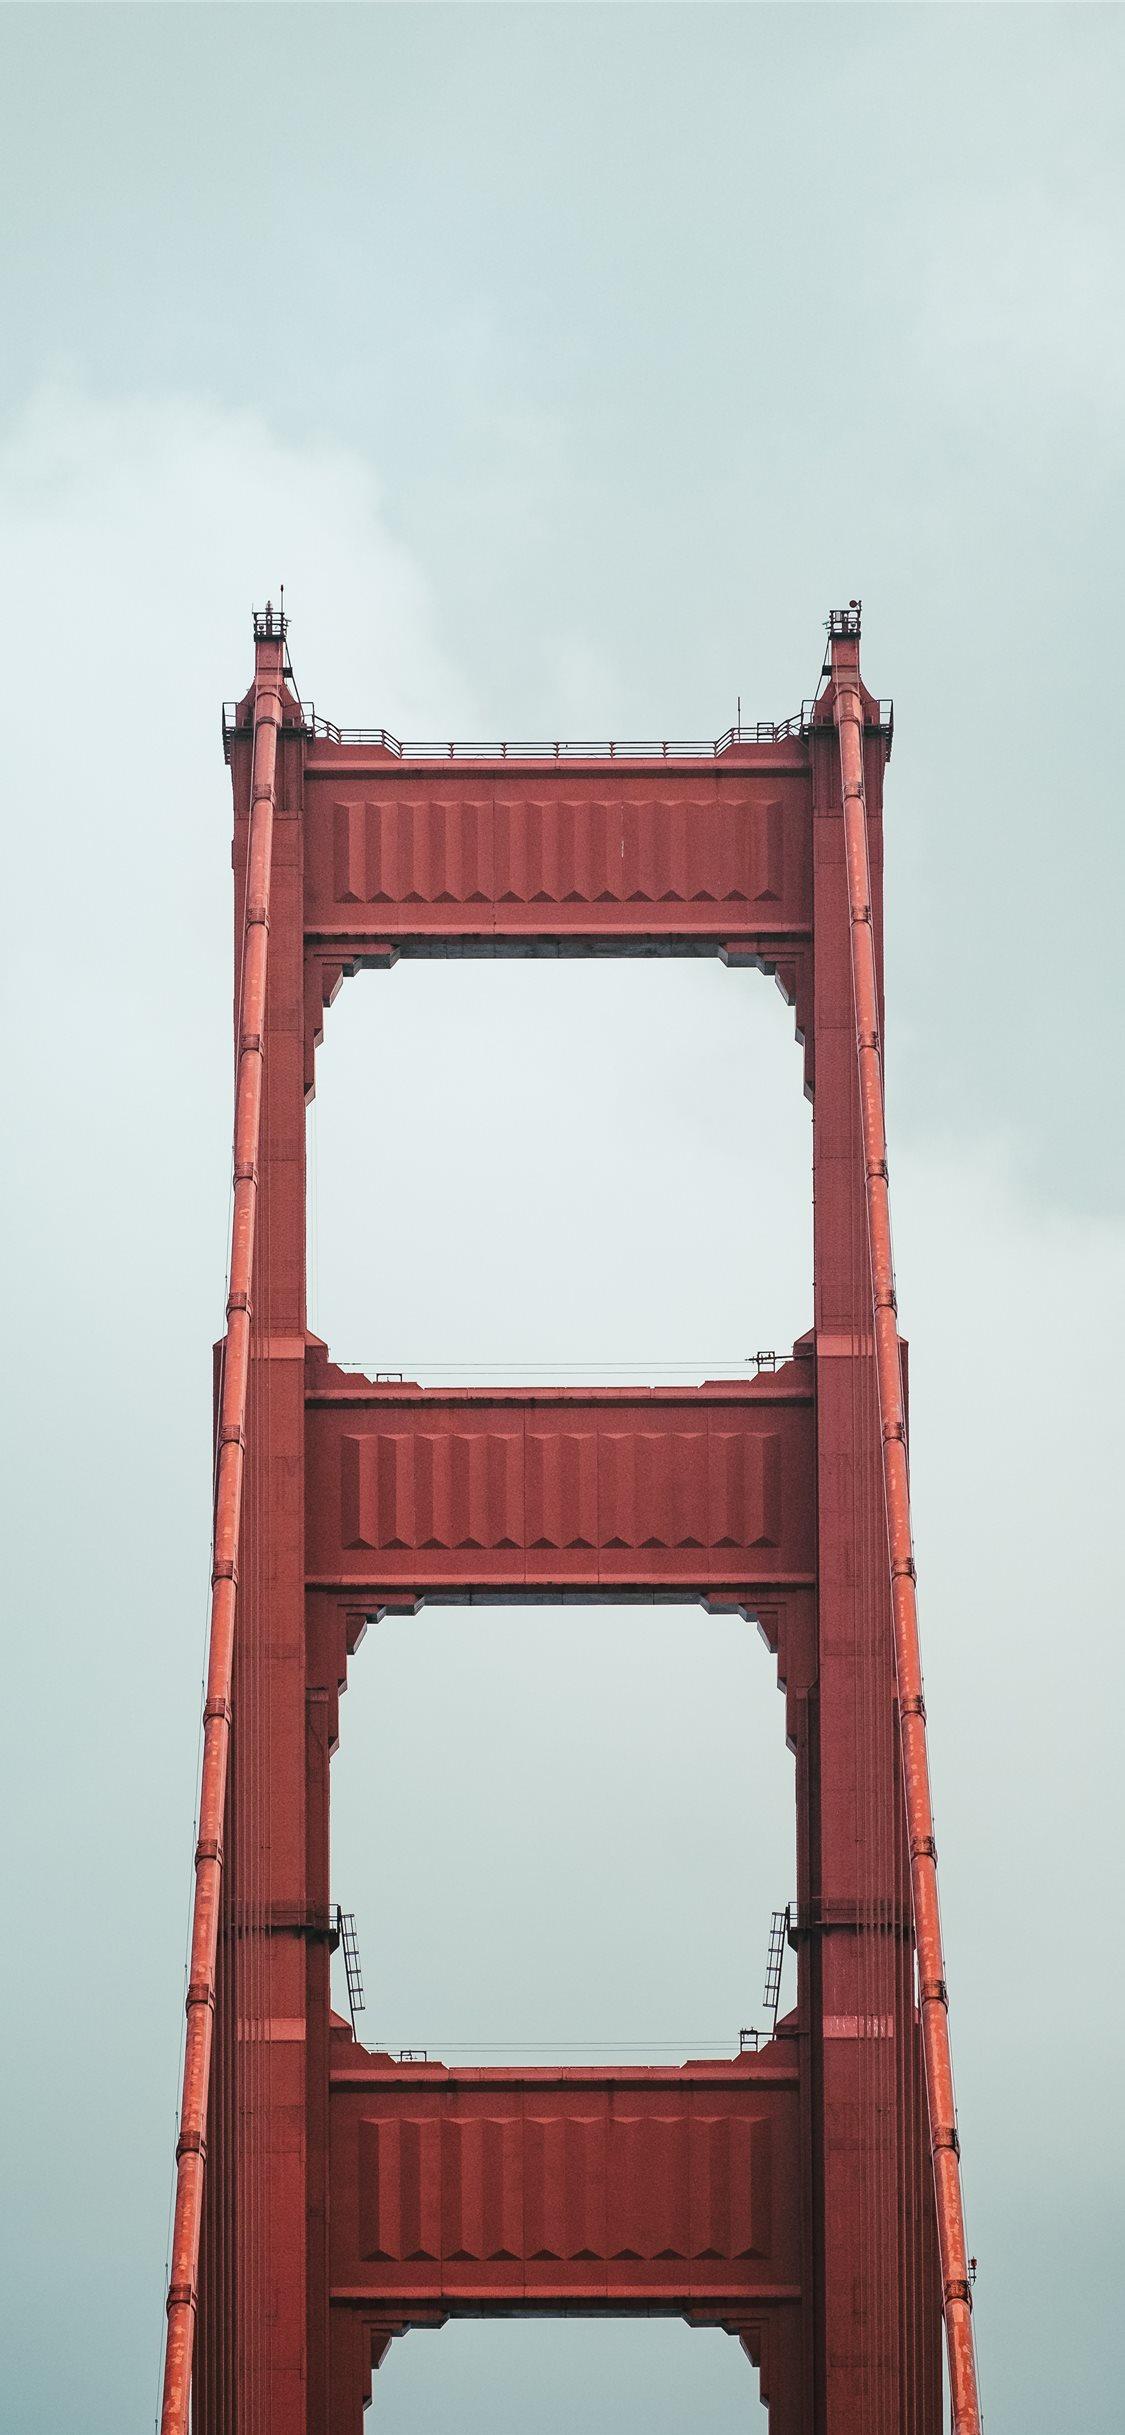 Golden Gate bridge San Francisco iPhone X Wallpapers Free Download